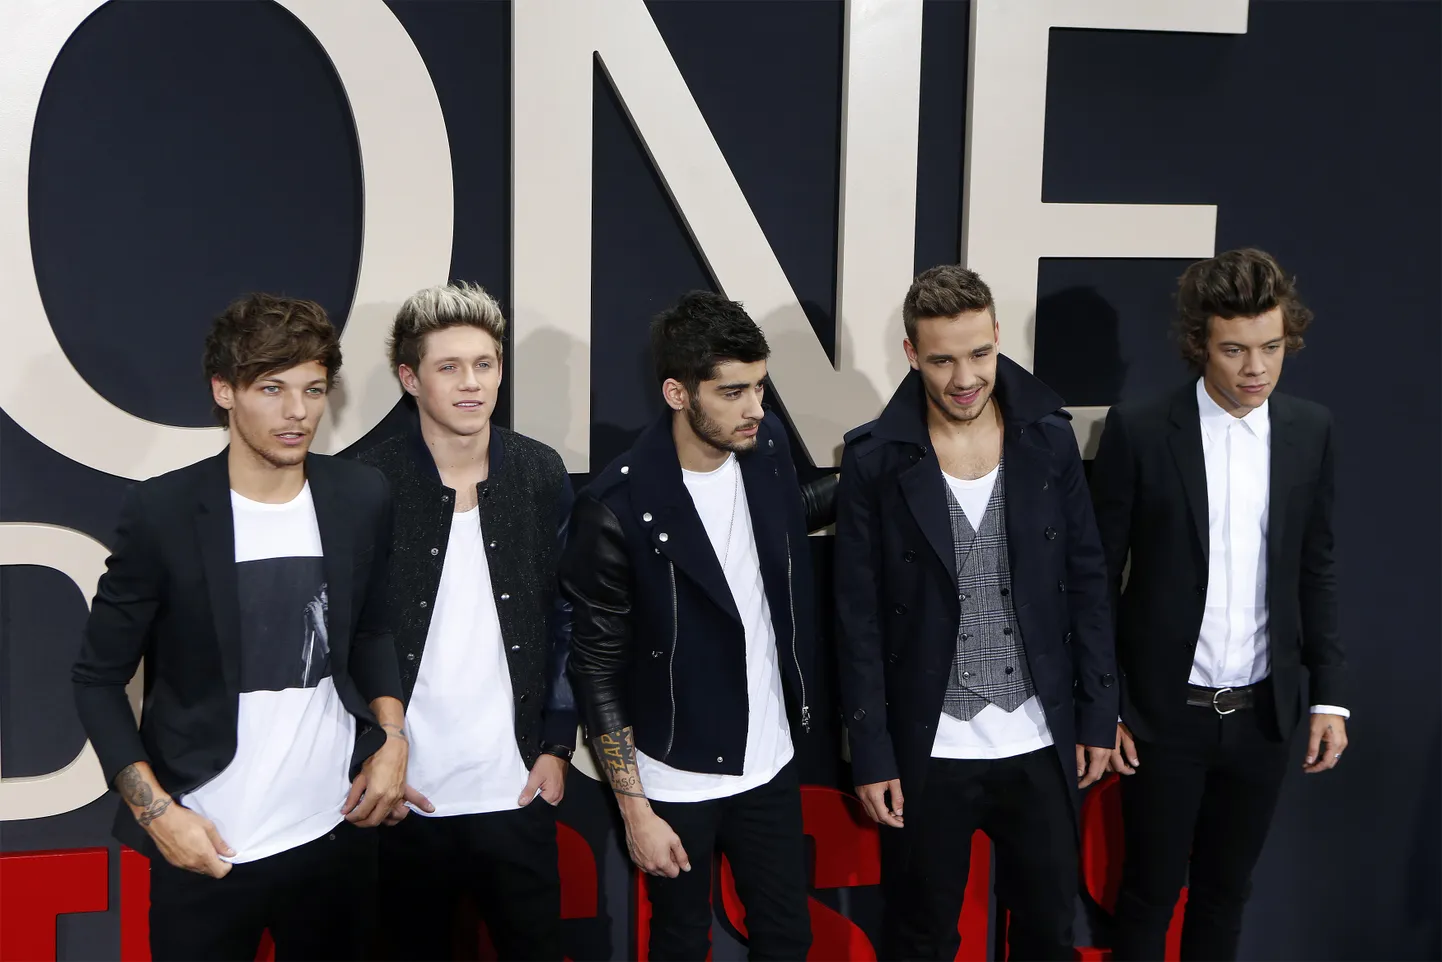 Briti-Iiri poistebänd One Direction 26. augustil 2013 New Yorgis. Vasakult: Louis Tomlinson, Niall Horan, Zayn Malik, Liam Payne ja Harry Styles